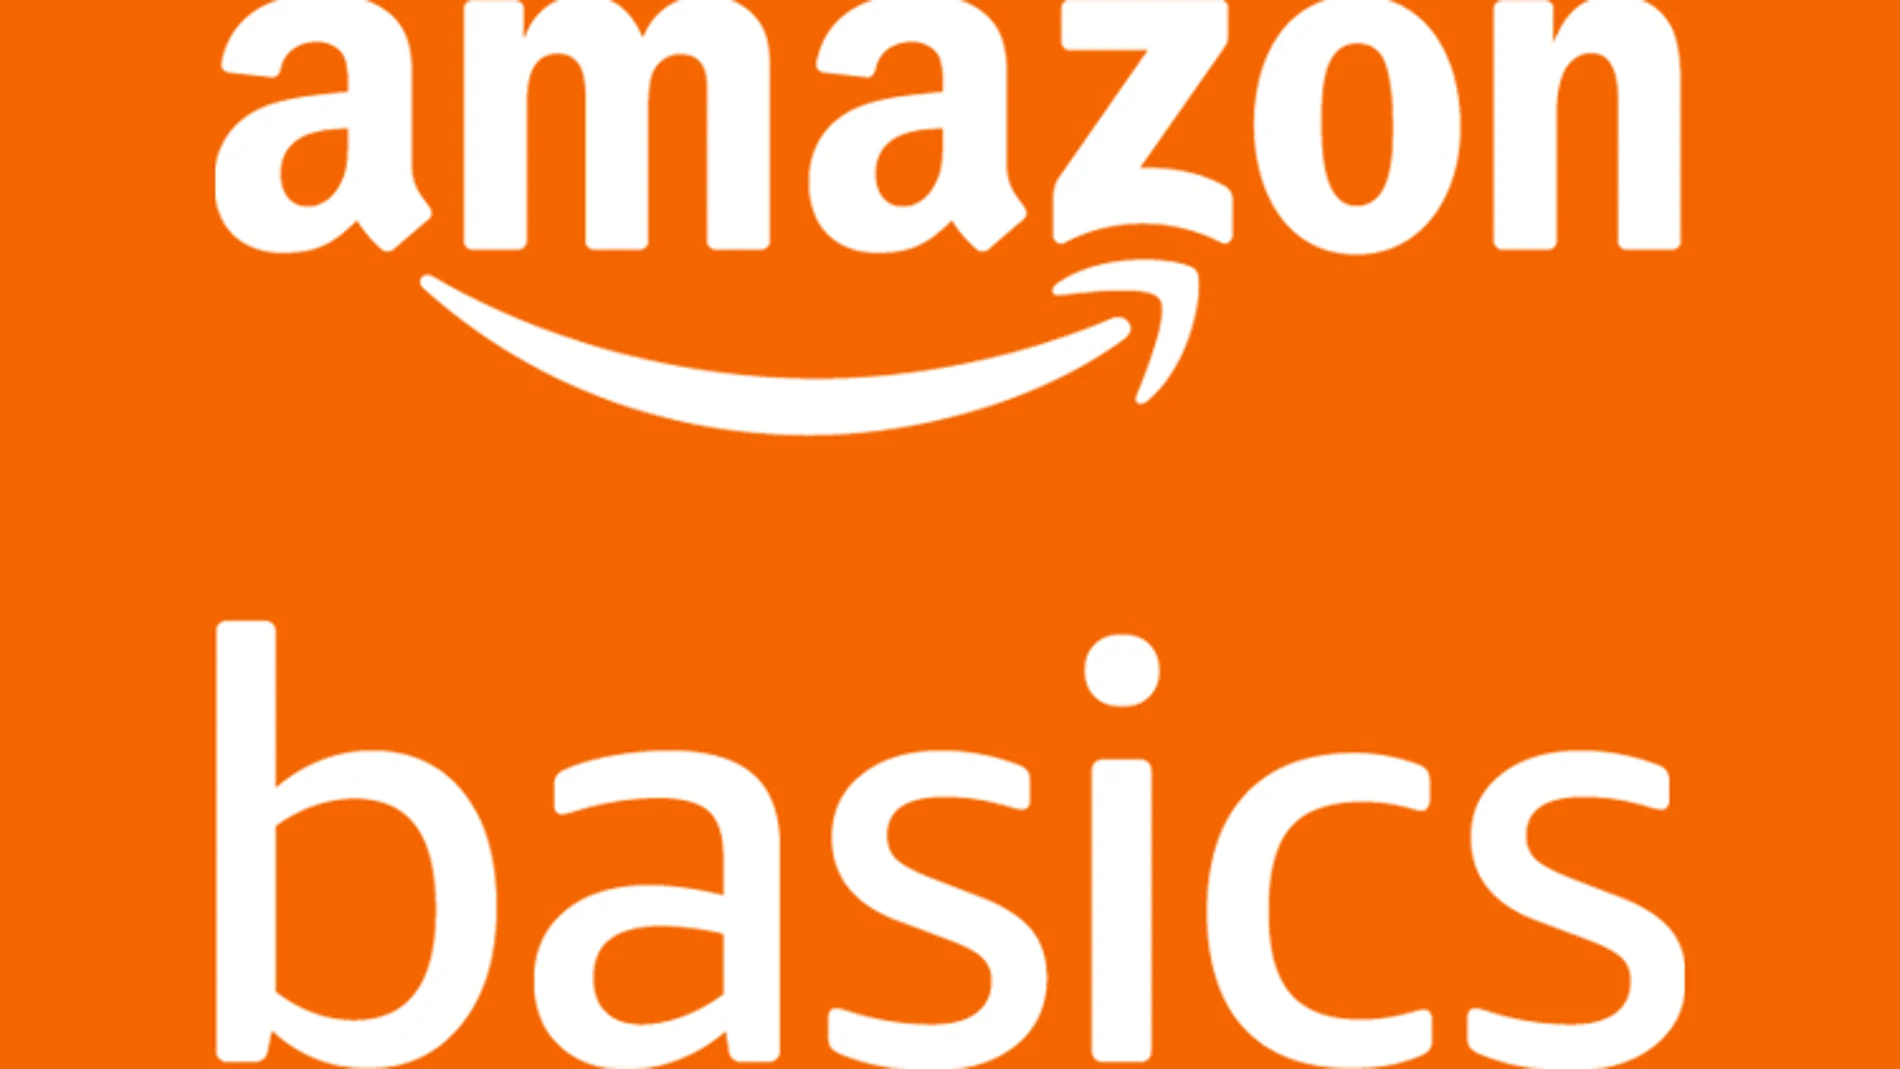 Amazon Basics de Amazon